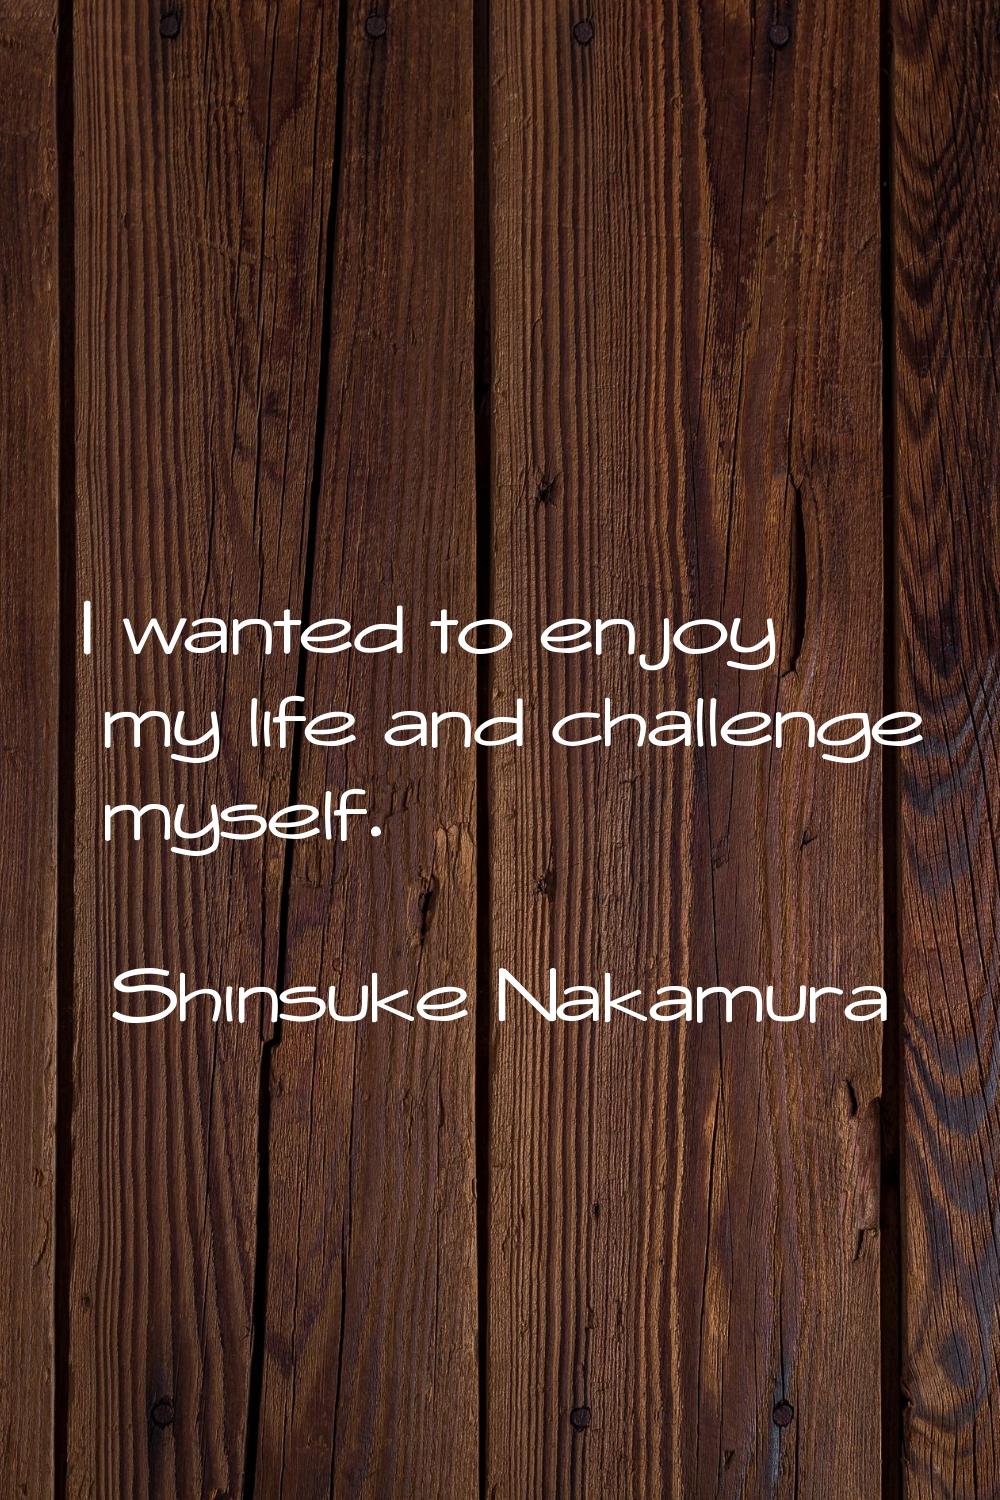 I wanted to enjoy my life and challenge myself.